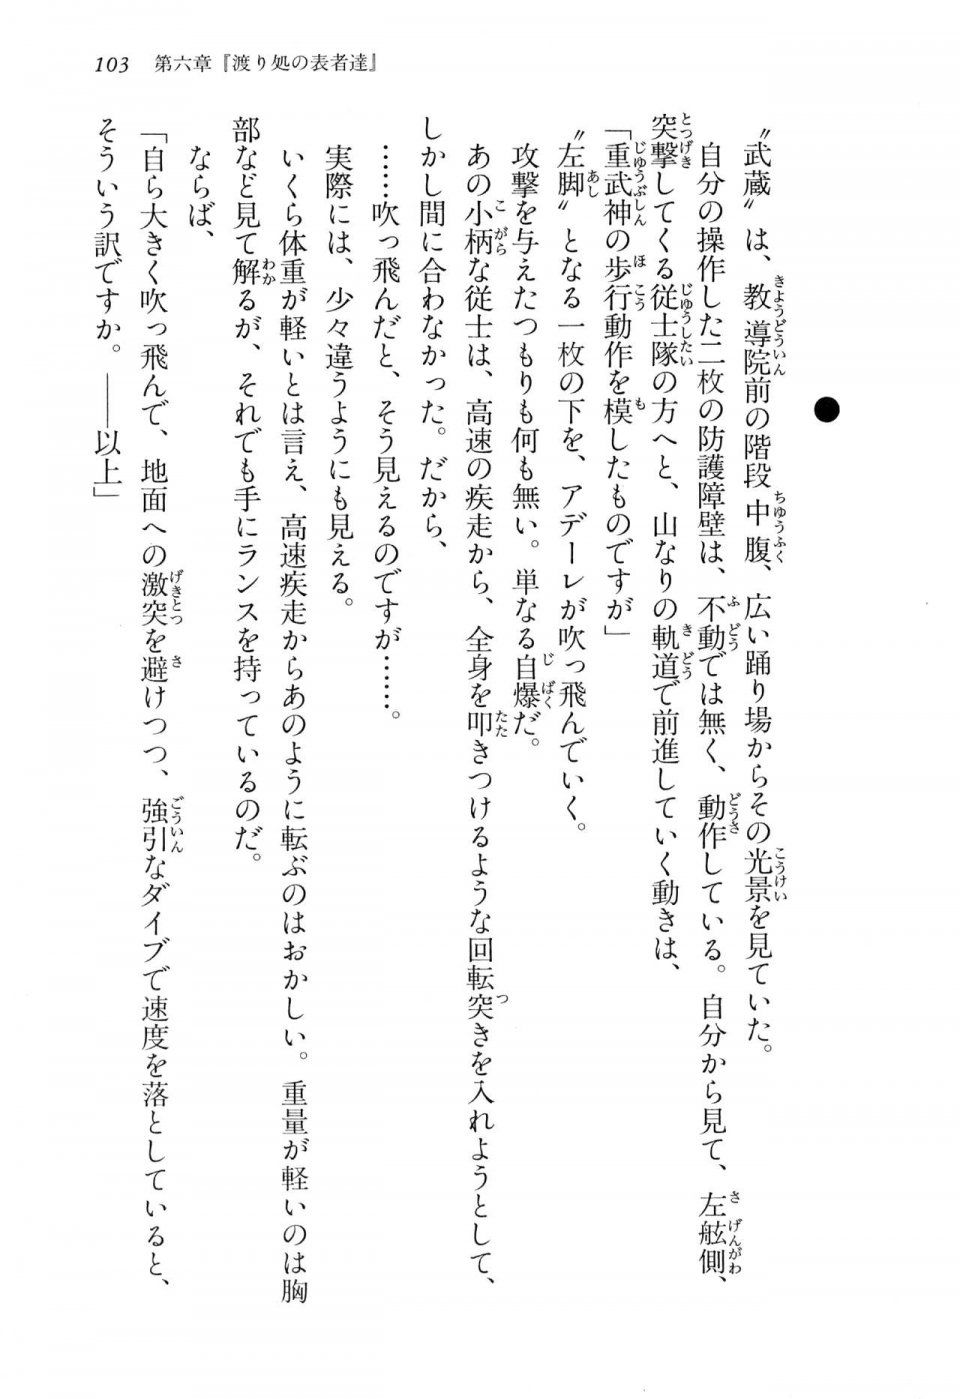 Kyoukai Senjou no Horizon BD Special Mininovel Vol 2(1B) - Photo #107